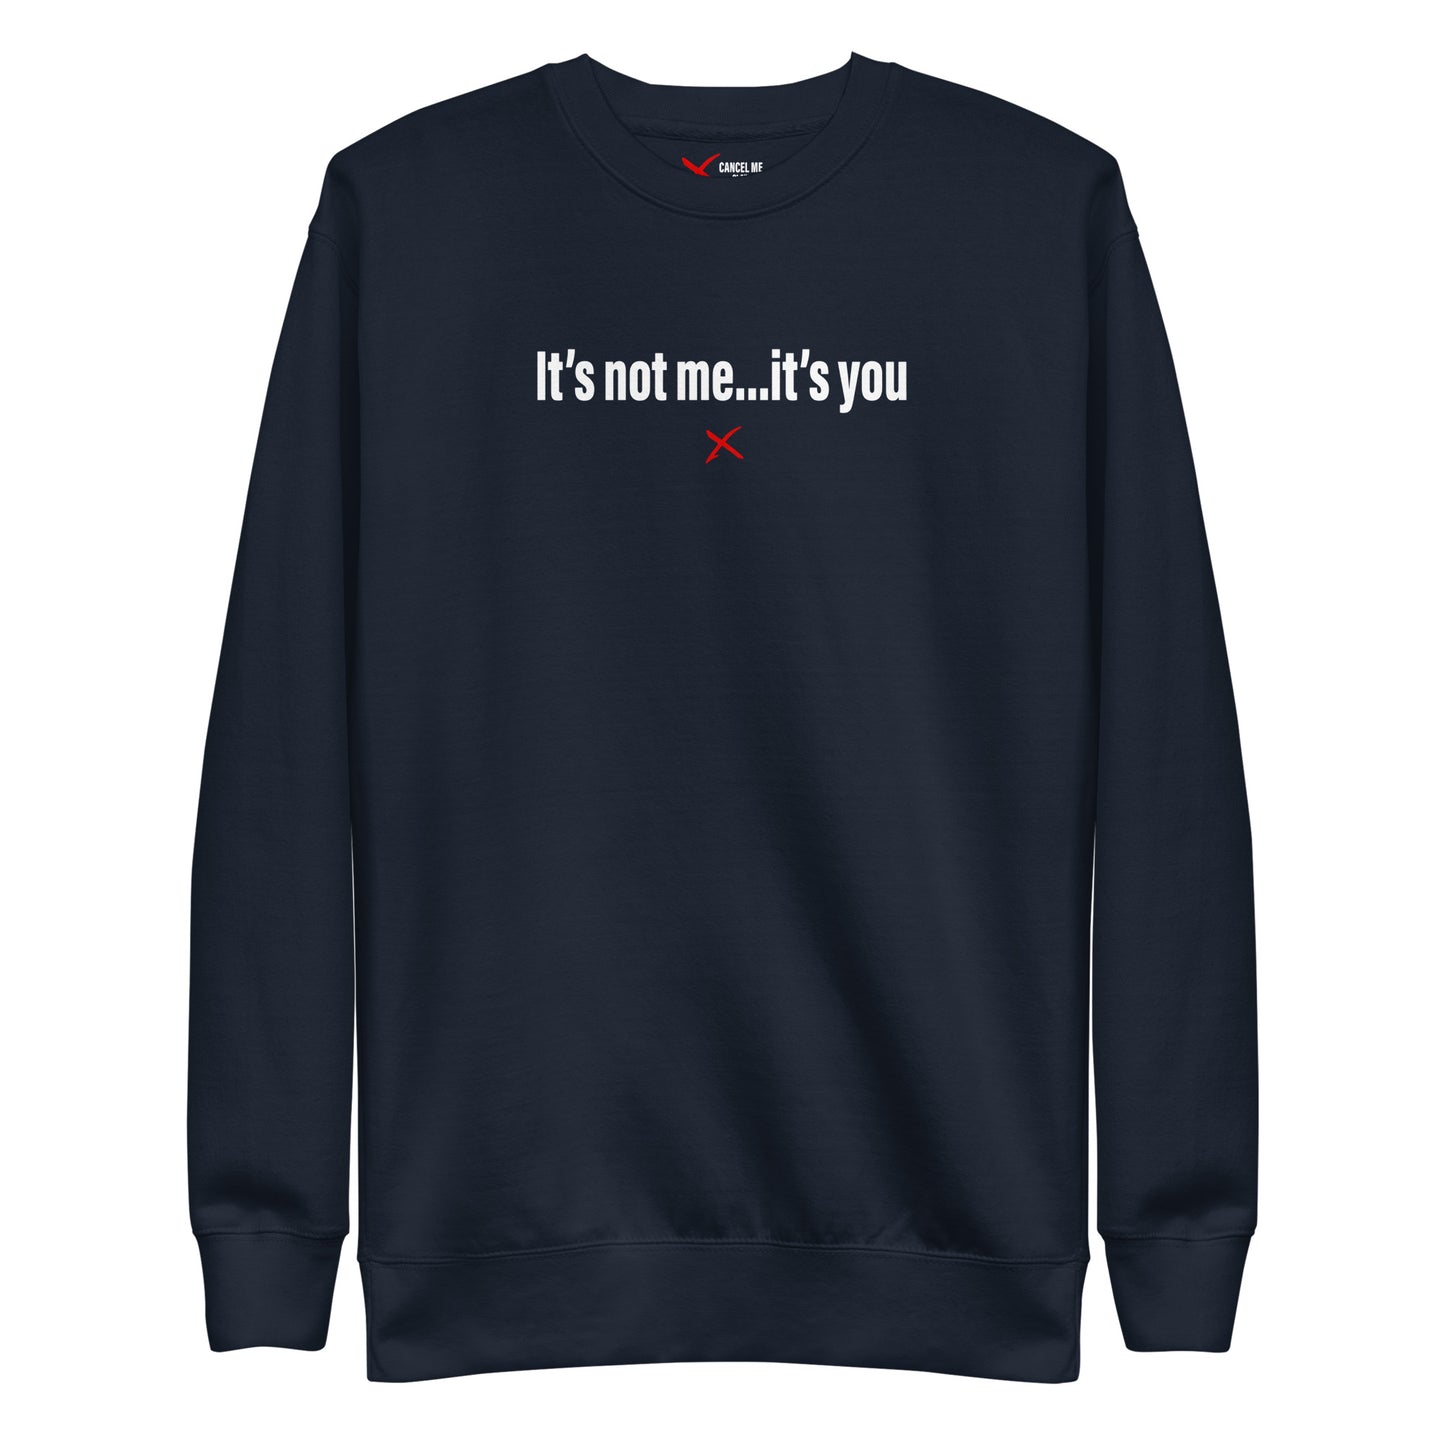 It's not me...it's you - Sweatshirt